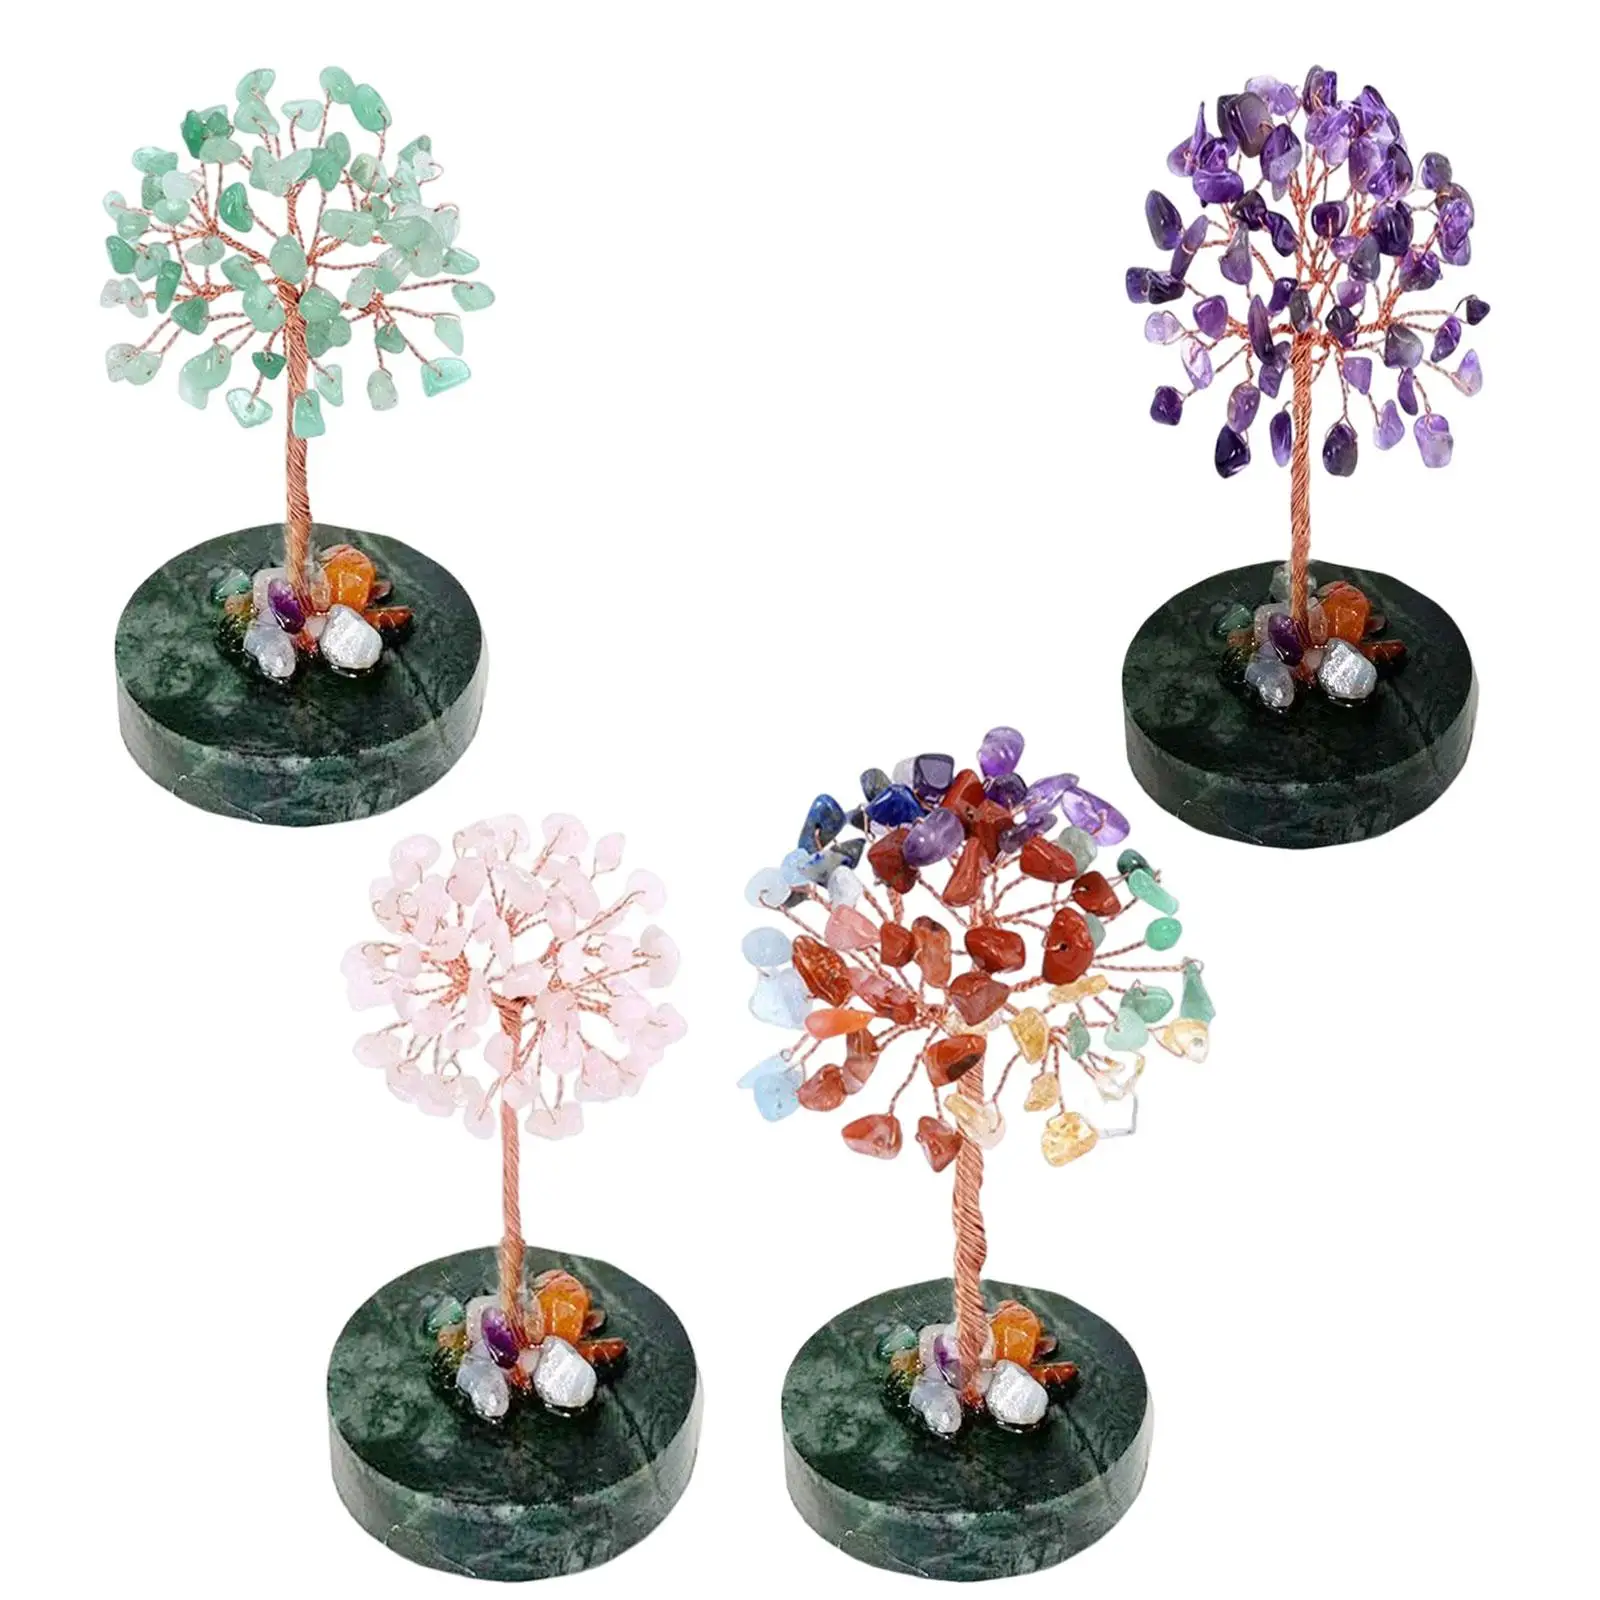 Feng Shui Tree Ornament Desktop Decoration Photo Props Scene Layout Handcraft Art Decor with Base Figurines for Indoor Wedding